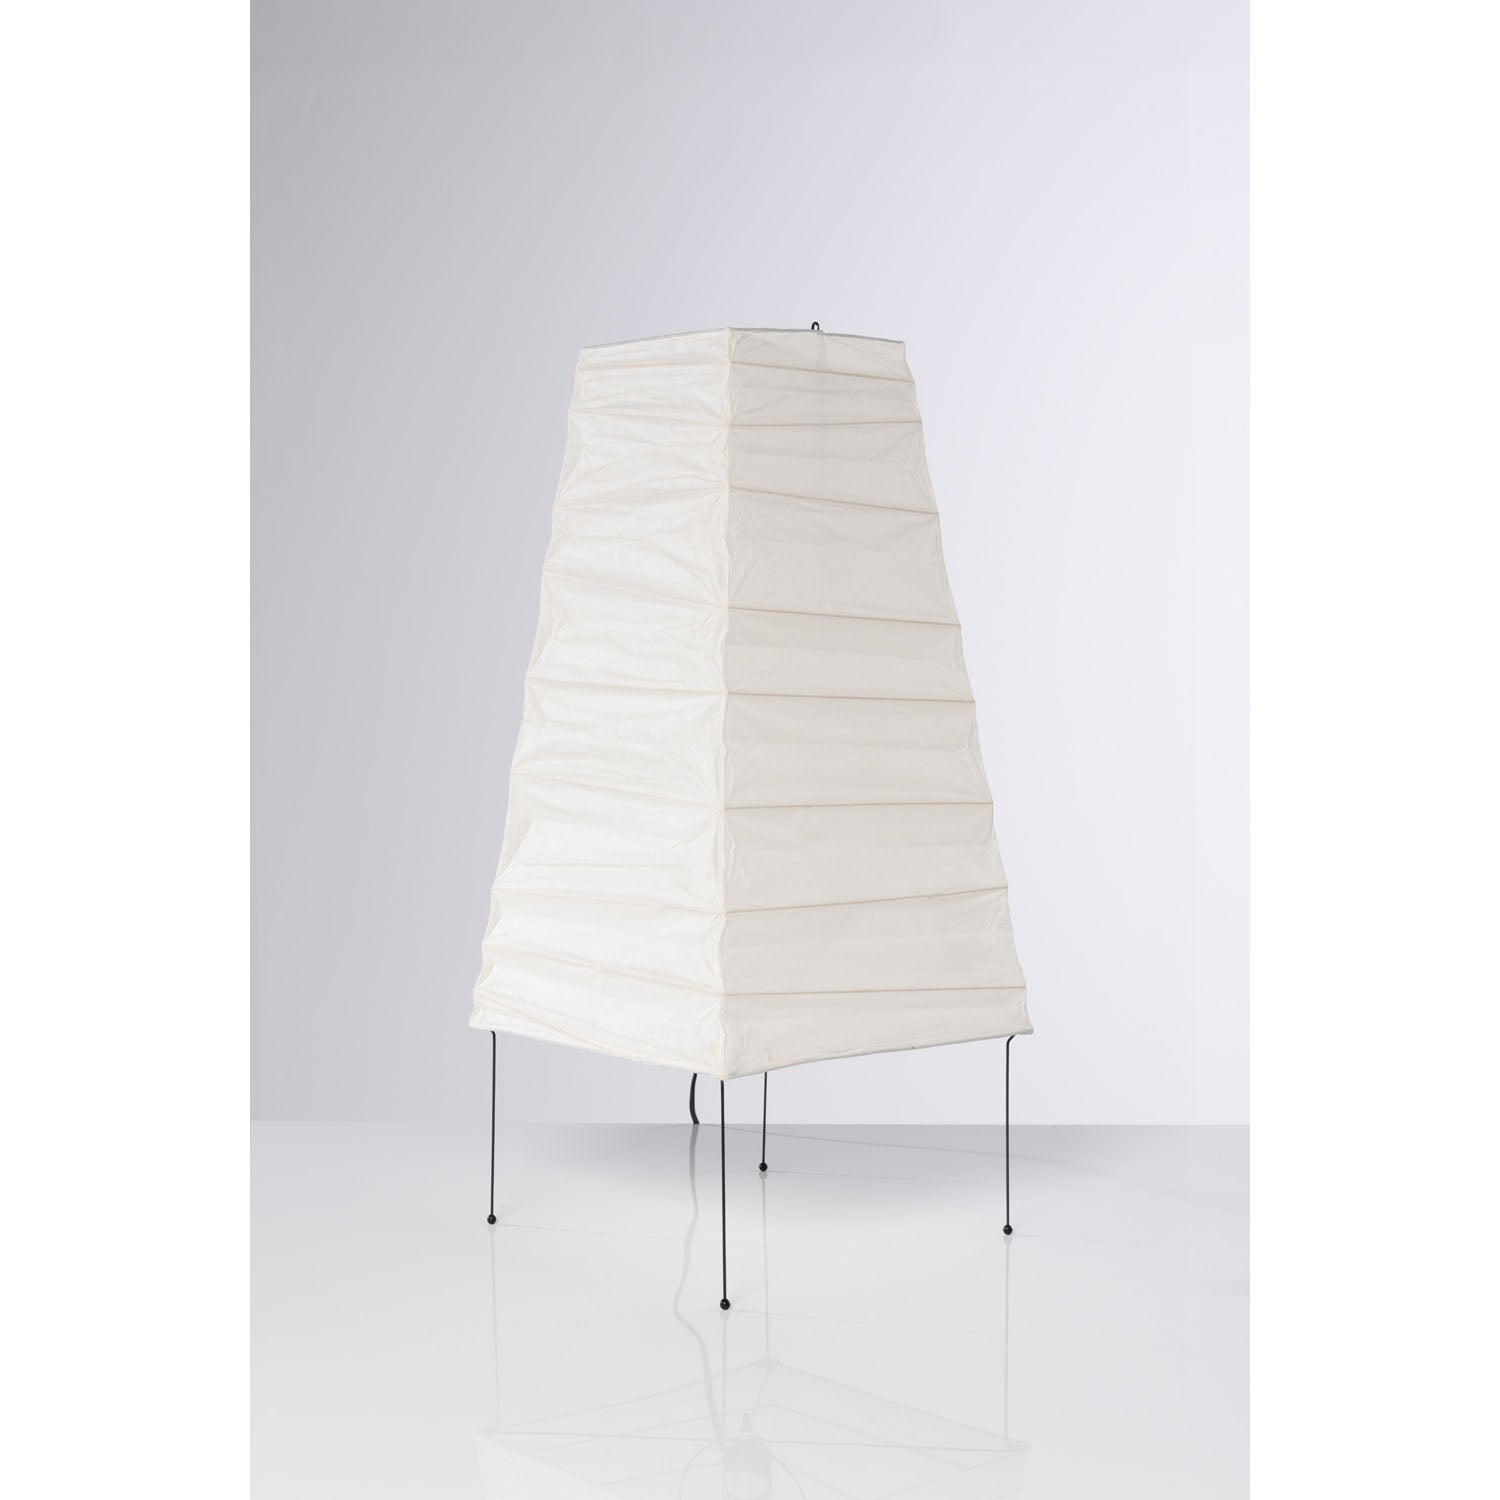 Japanese Paper Floor Lamp Minimalism Decor Lamps For Bedroom Living Room - Minimalist Floor Lamps